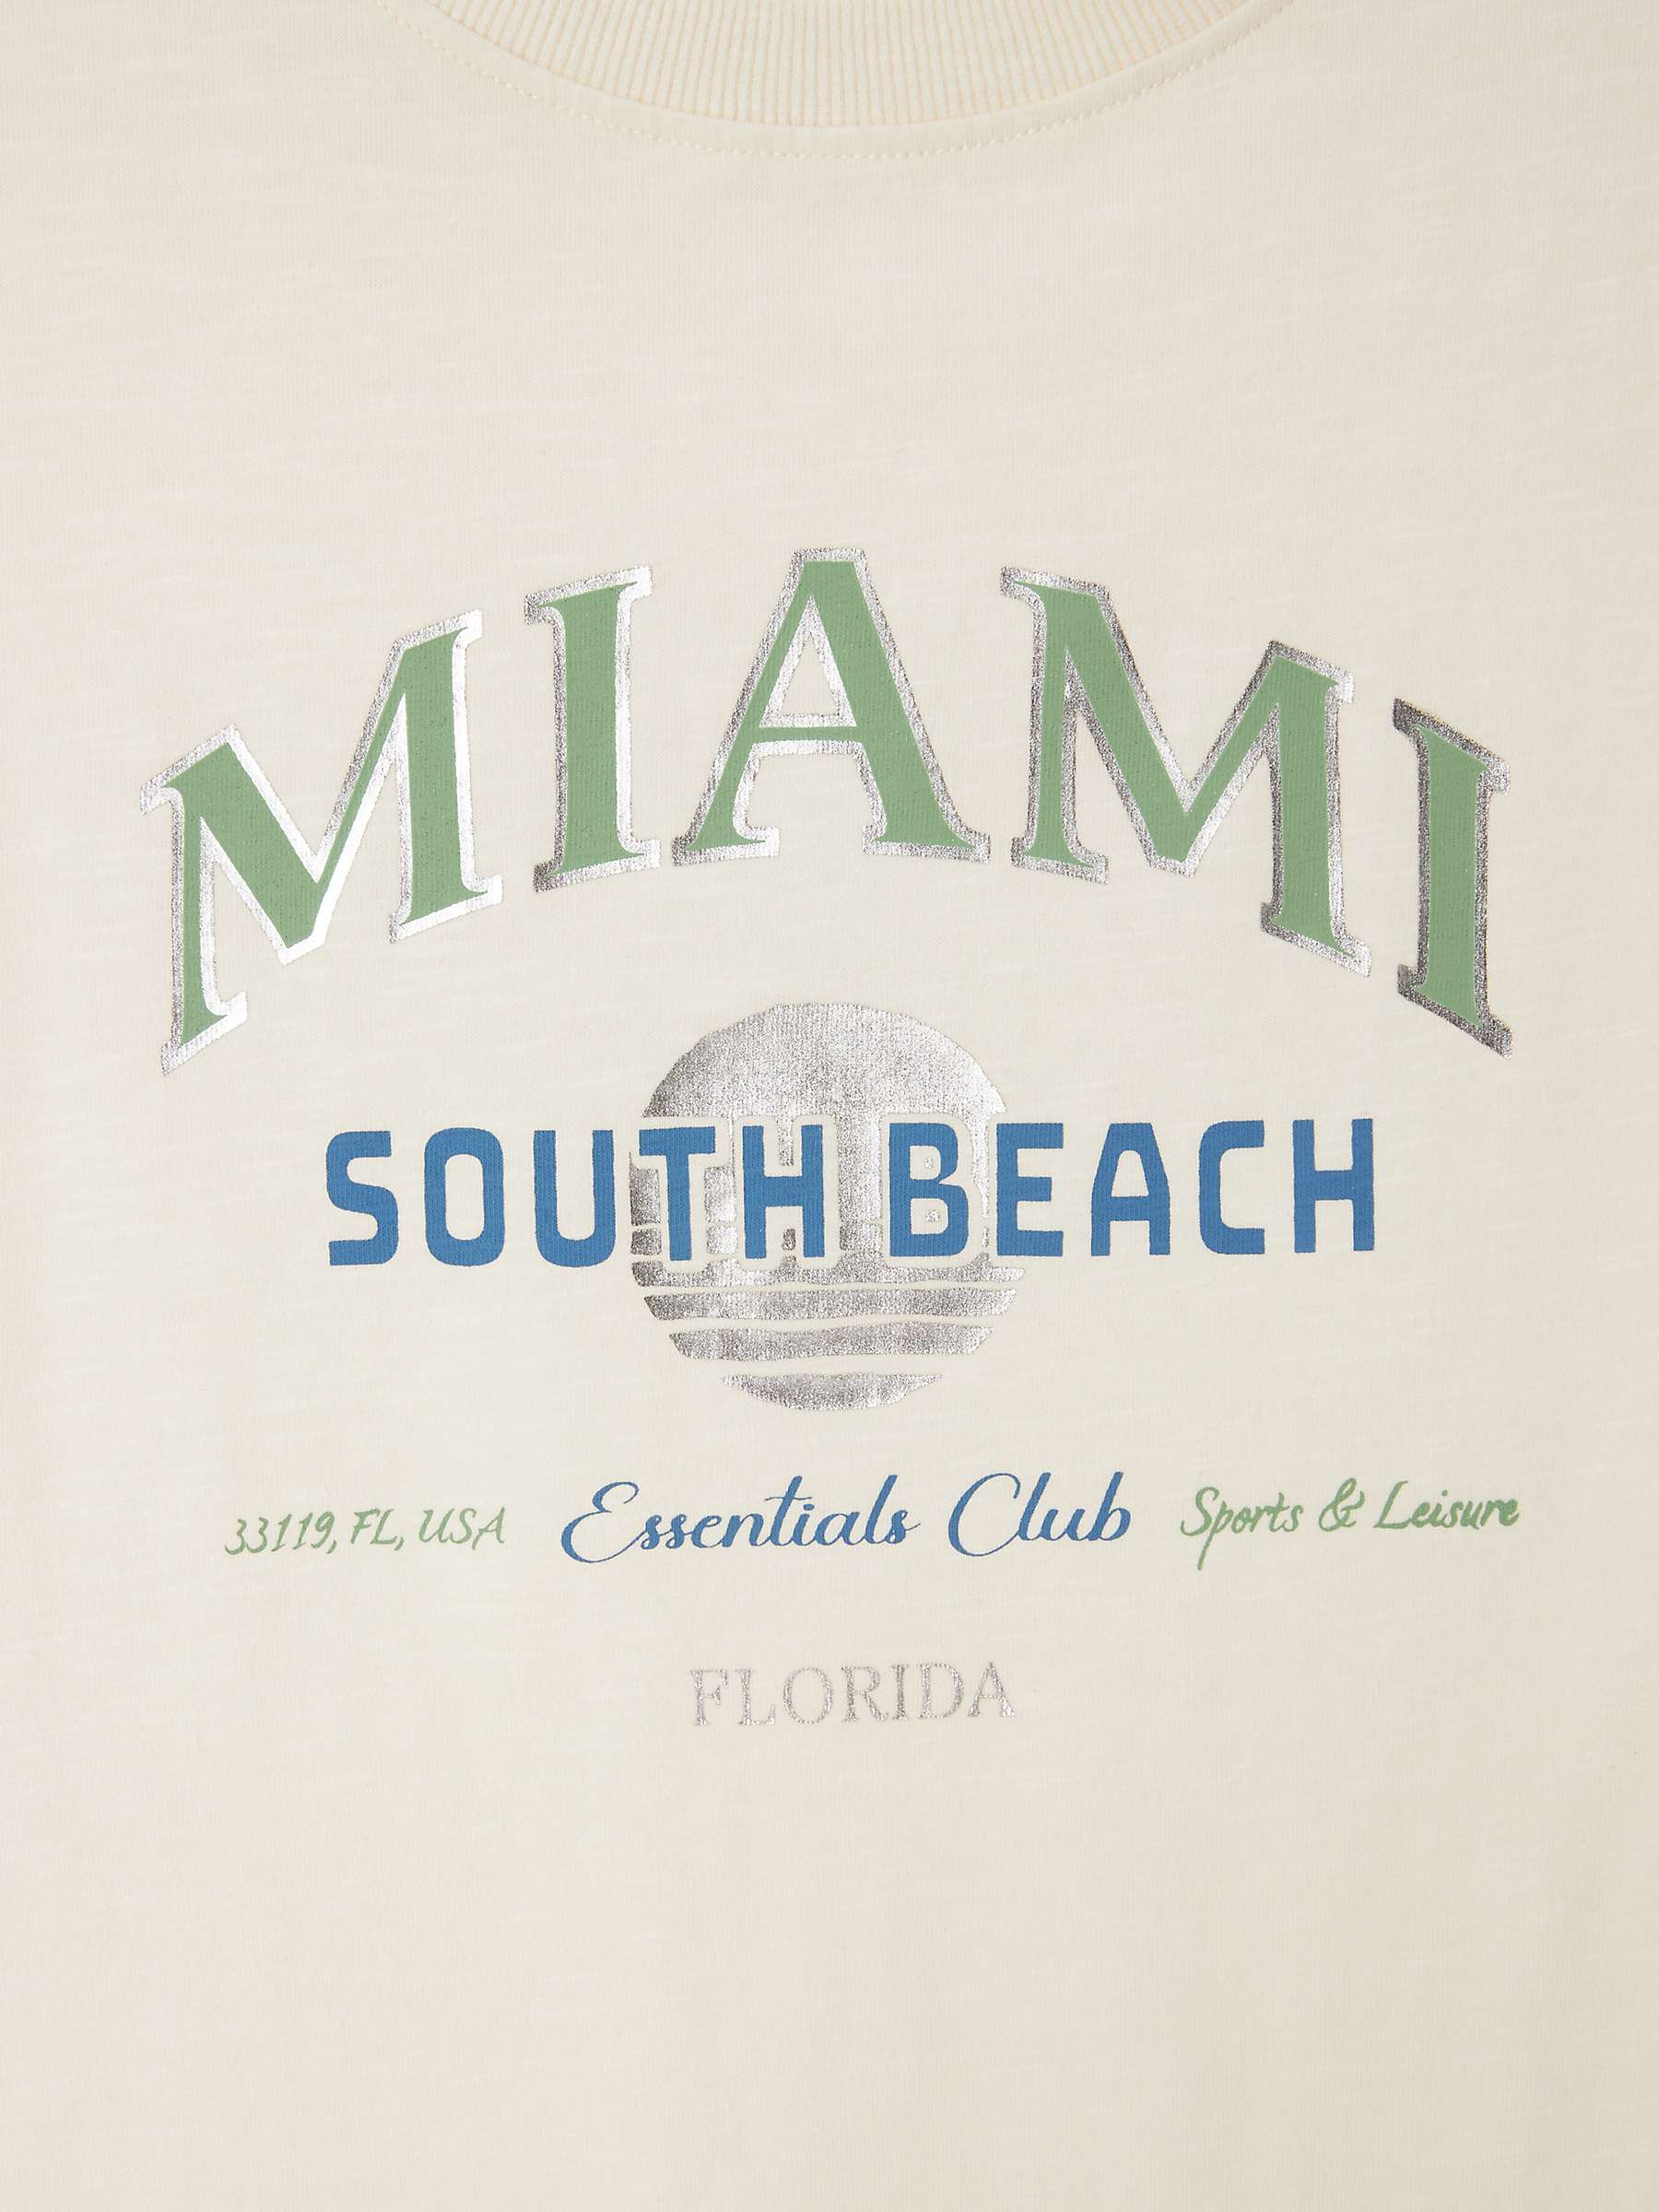 Buy John Lewis Kids' Miami Short Sleeve T-Shirt, Egret Online at johnlewis.com